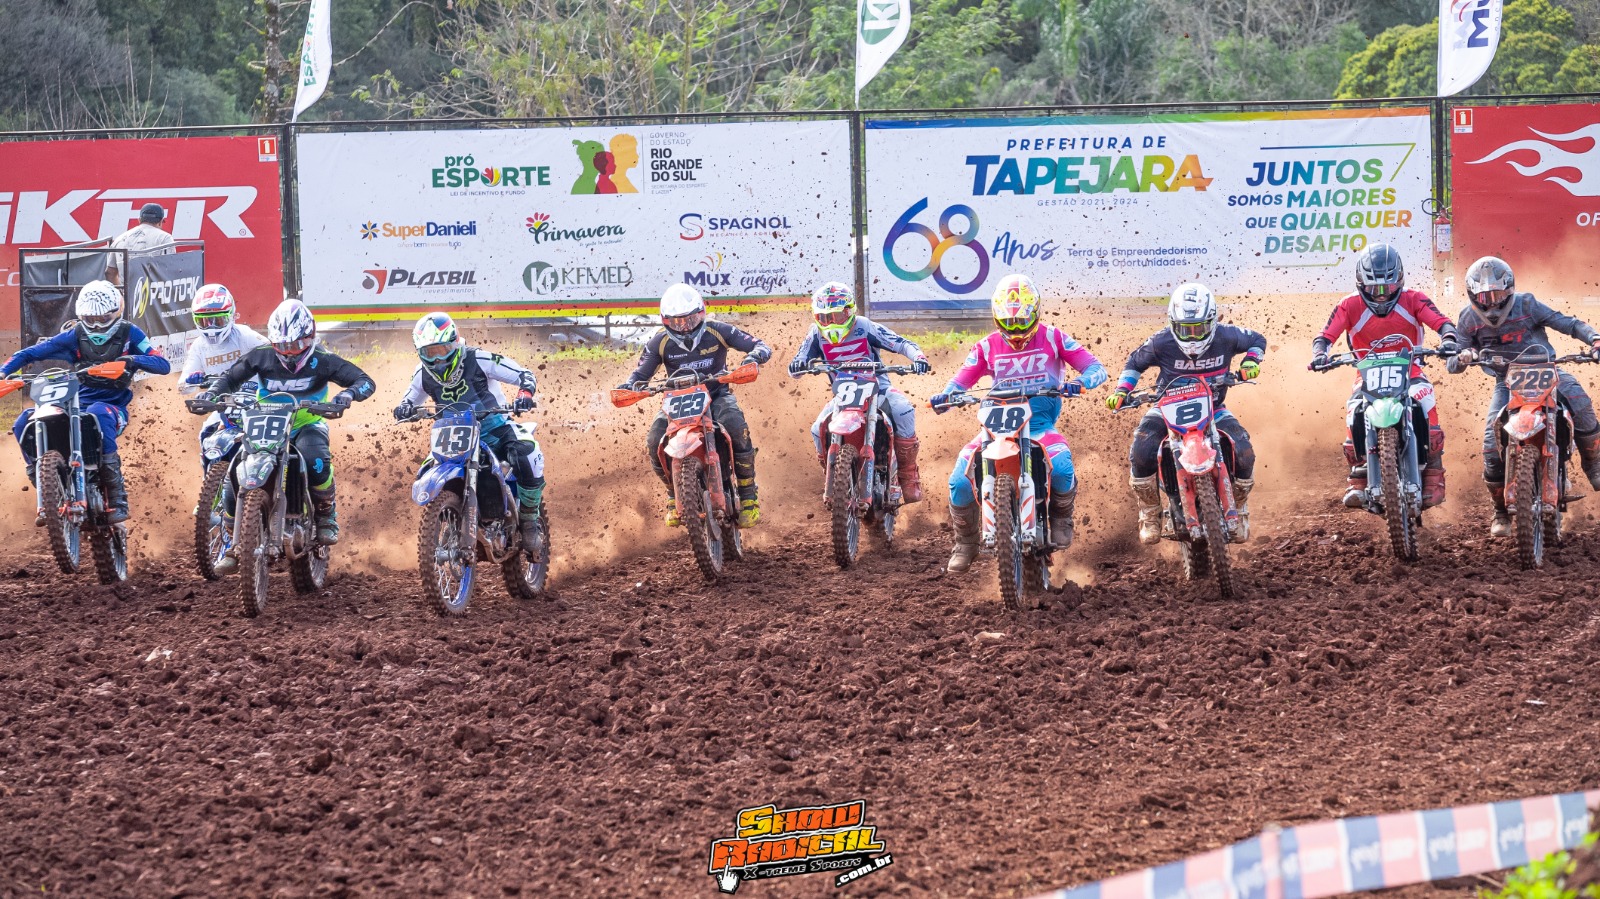 Tapejara - Domingo Motocross